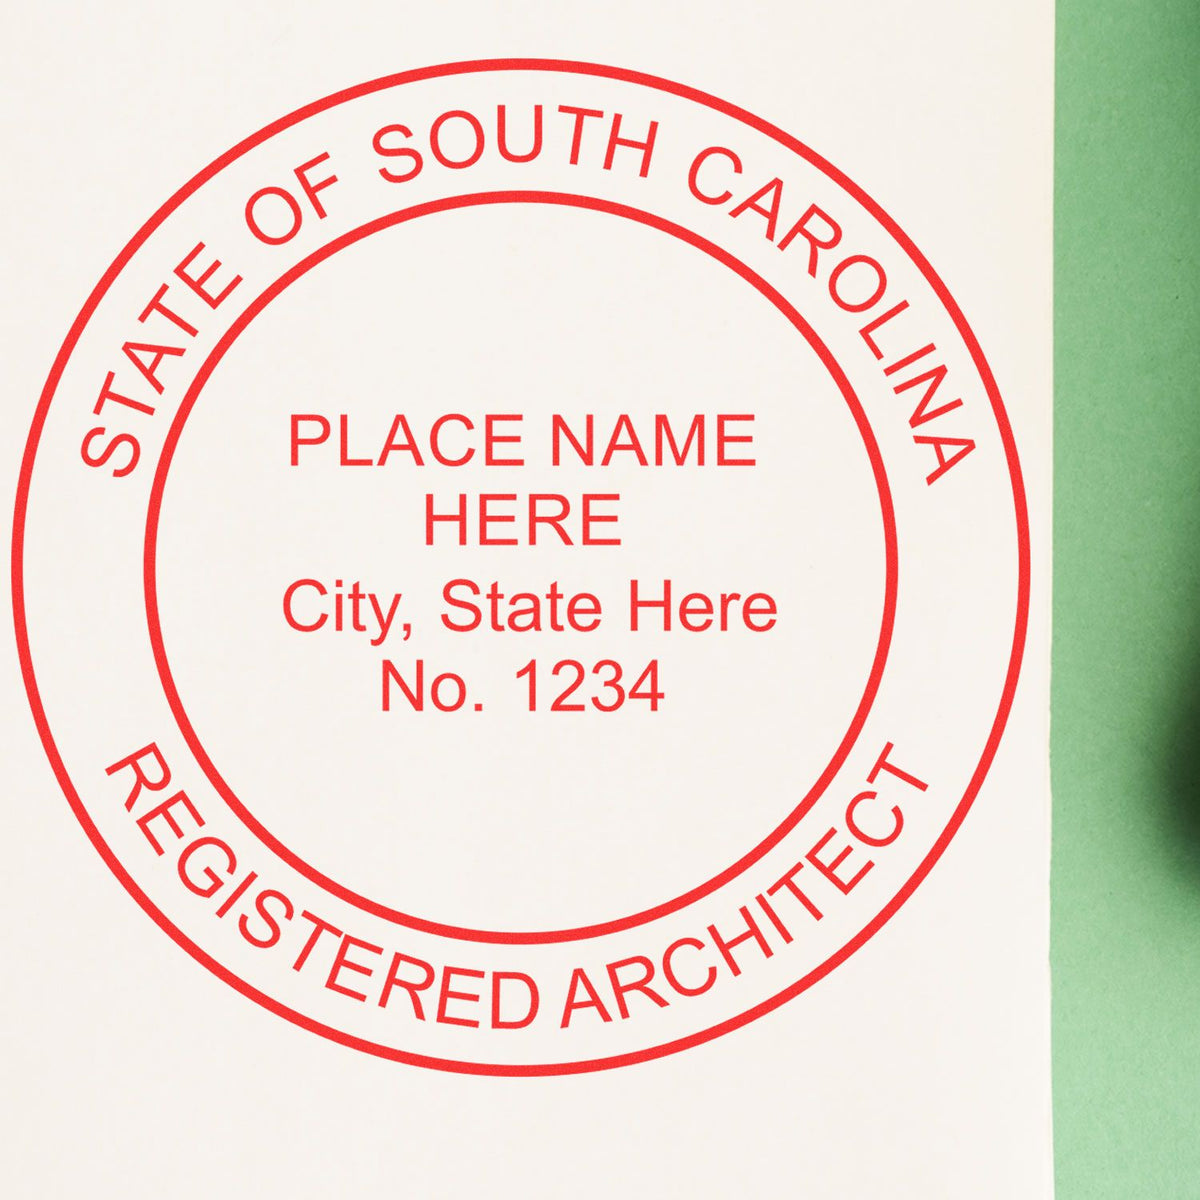 South Carolina Architect Seal Stamp Lifestyle Photo